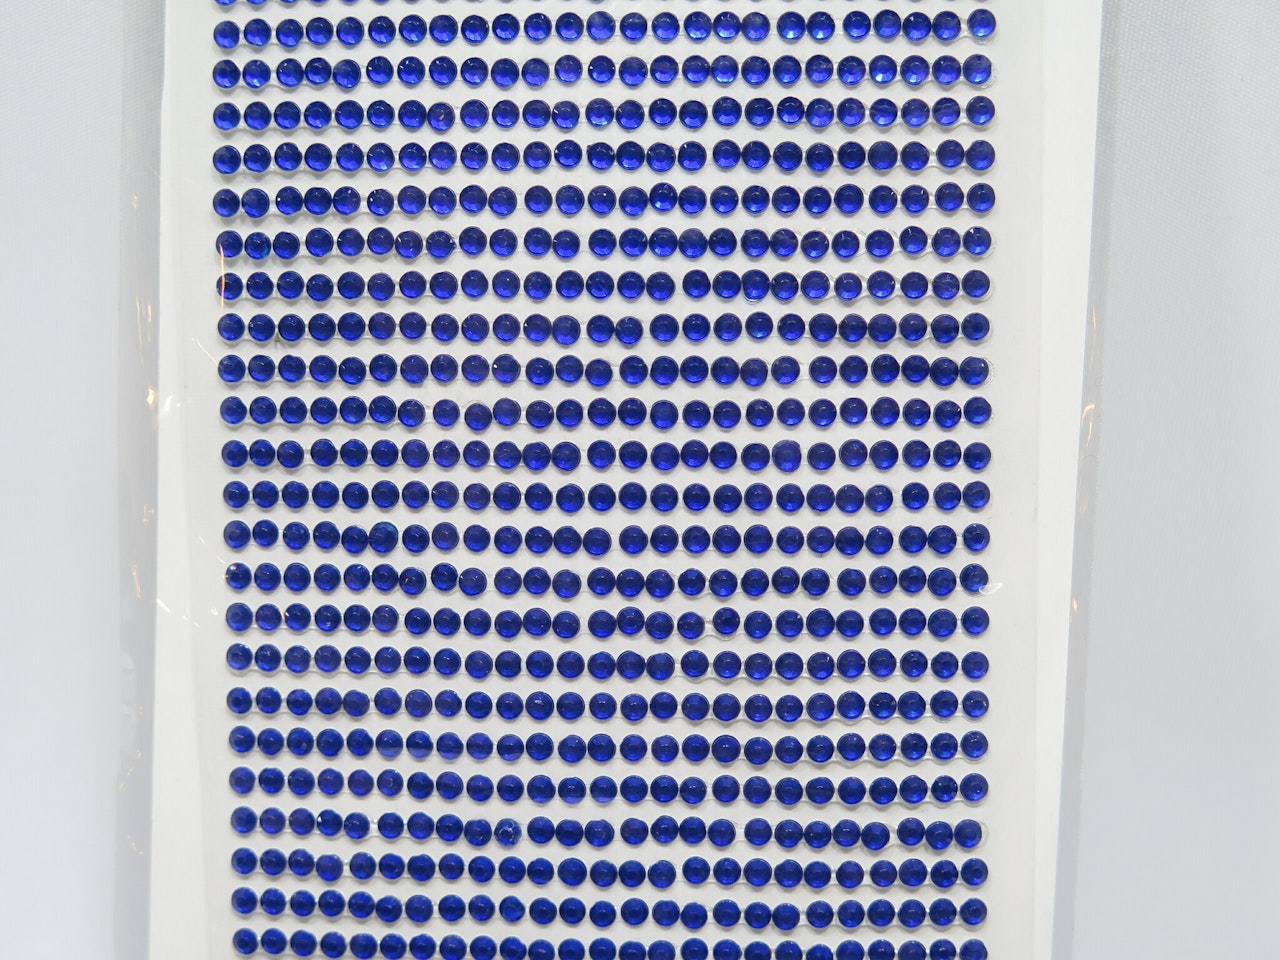 Akryl Rhinestone Stickers blå